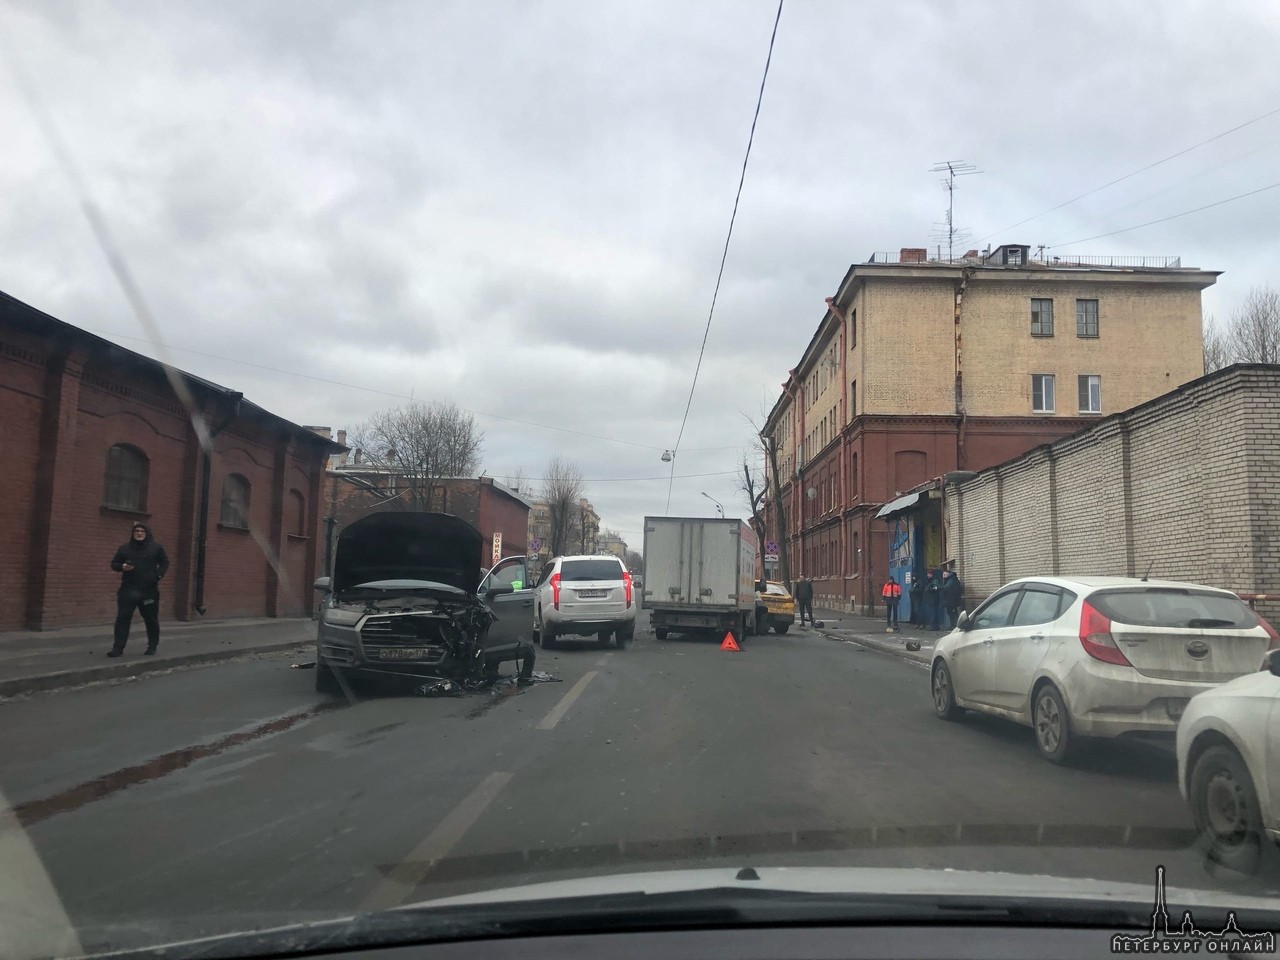 На улице Степана Разина Q7, Focus 3 такси и неГазель не поделили дорогу.